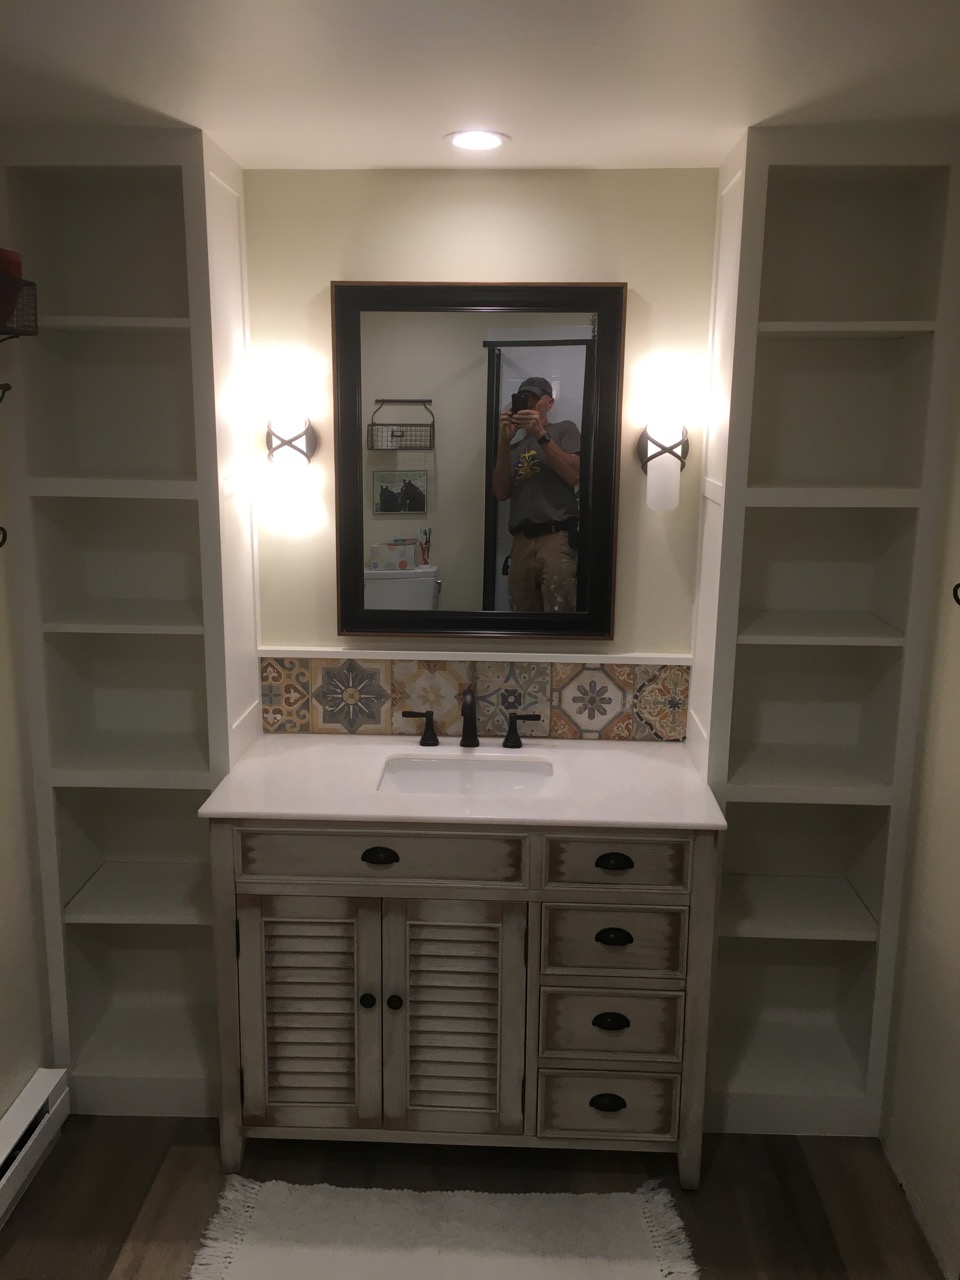 New full bath vanity with custom shelving